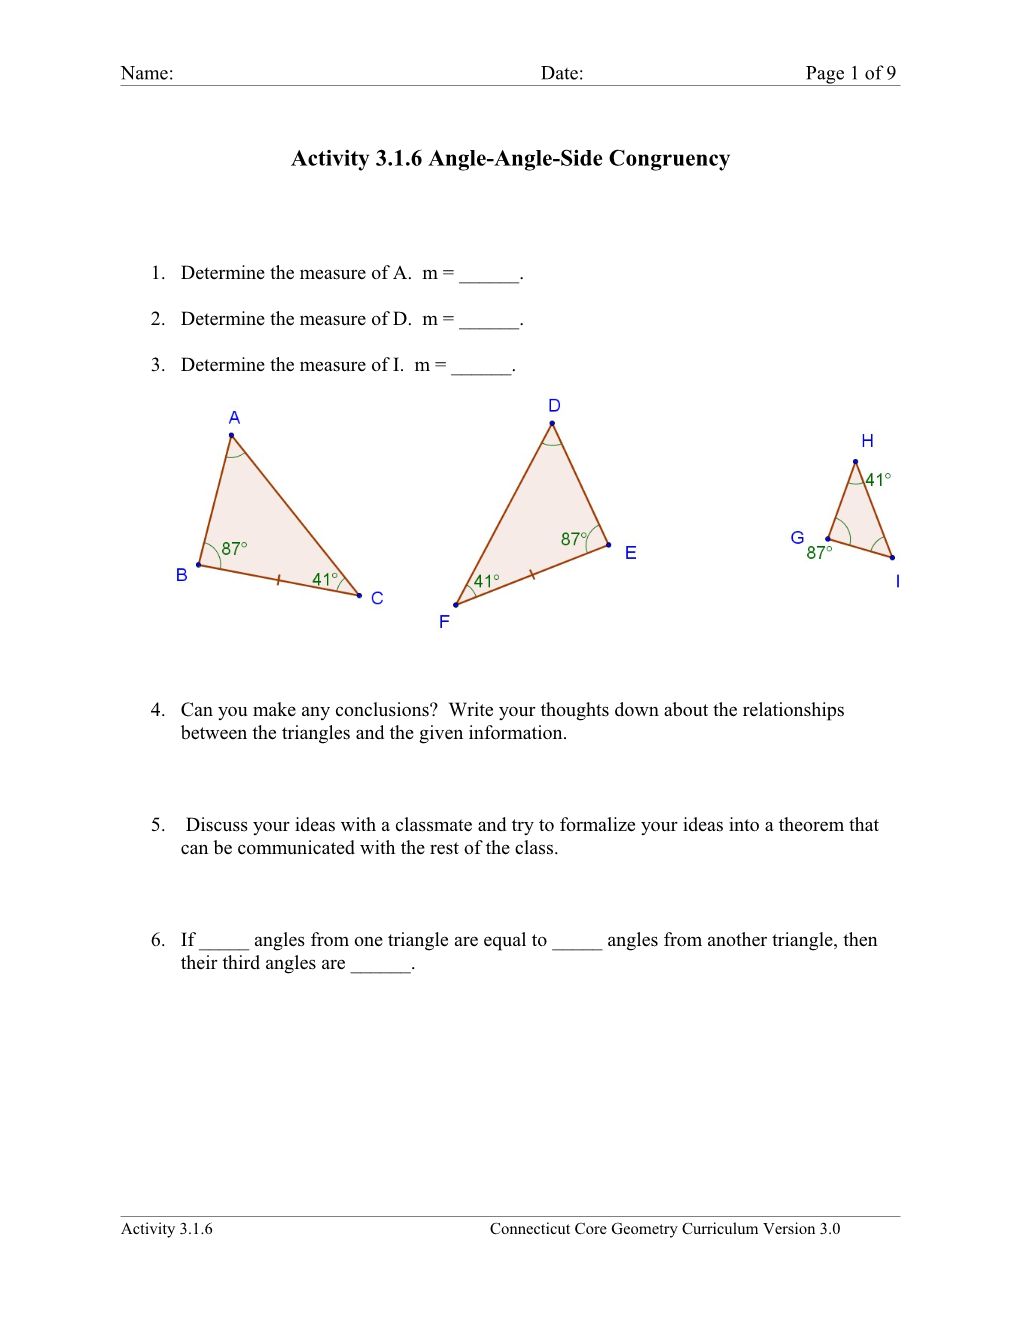 Activity 3.1.6 Angle-Angle-Side Congruency